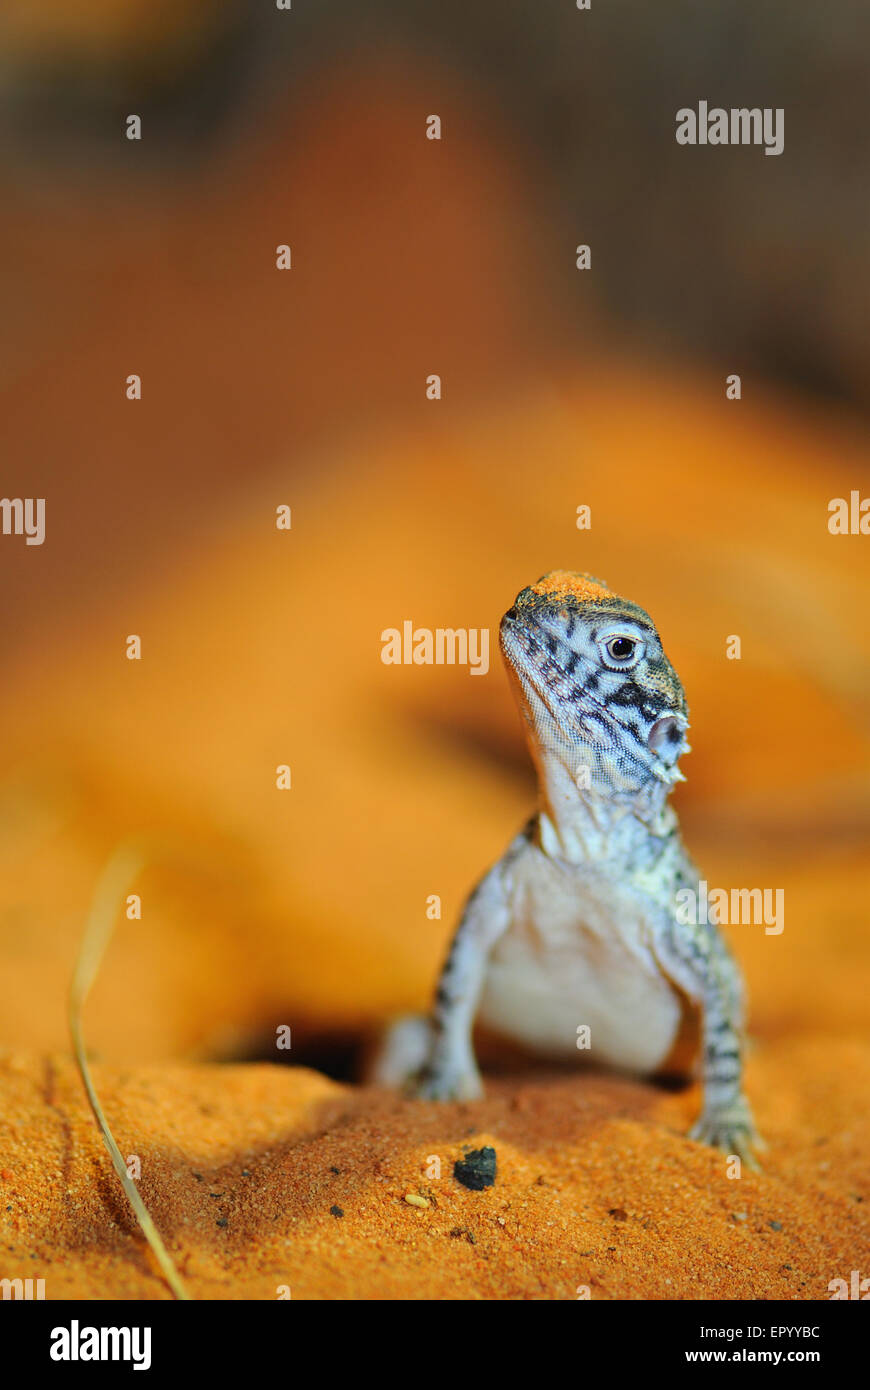 Lizard on the orange sand Stock Photo